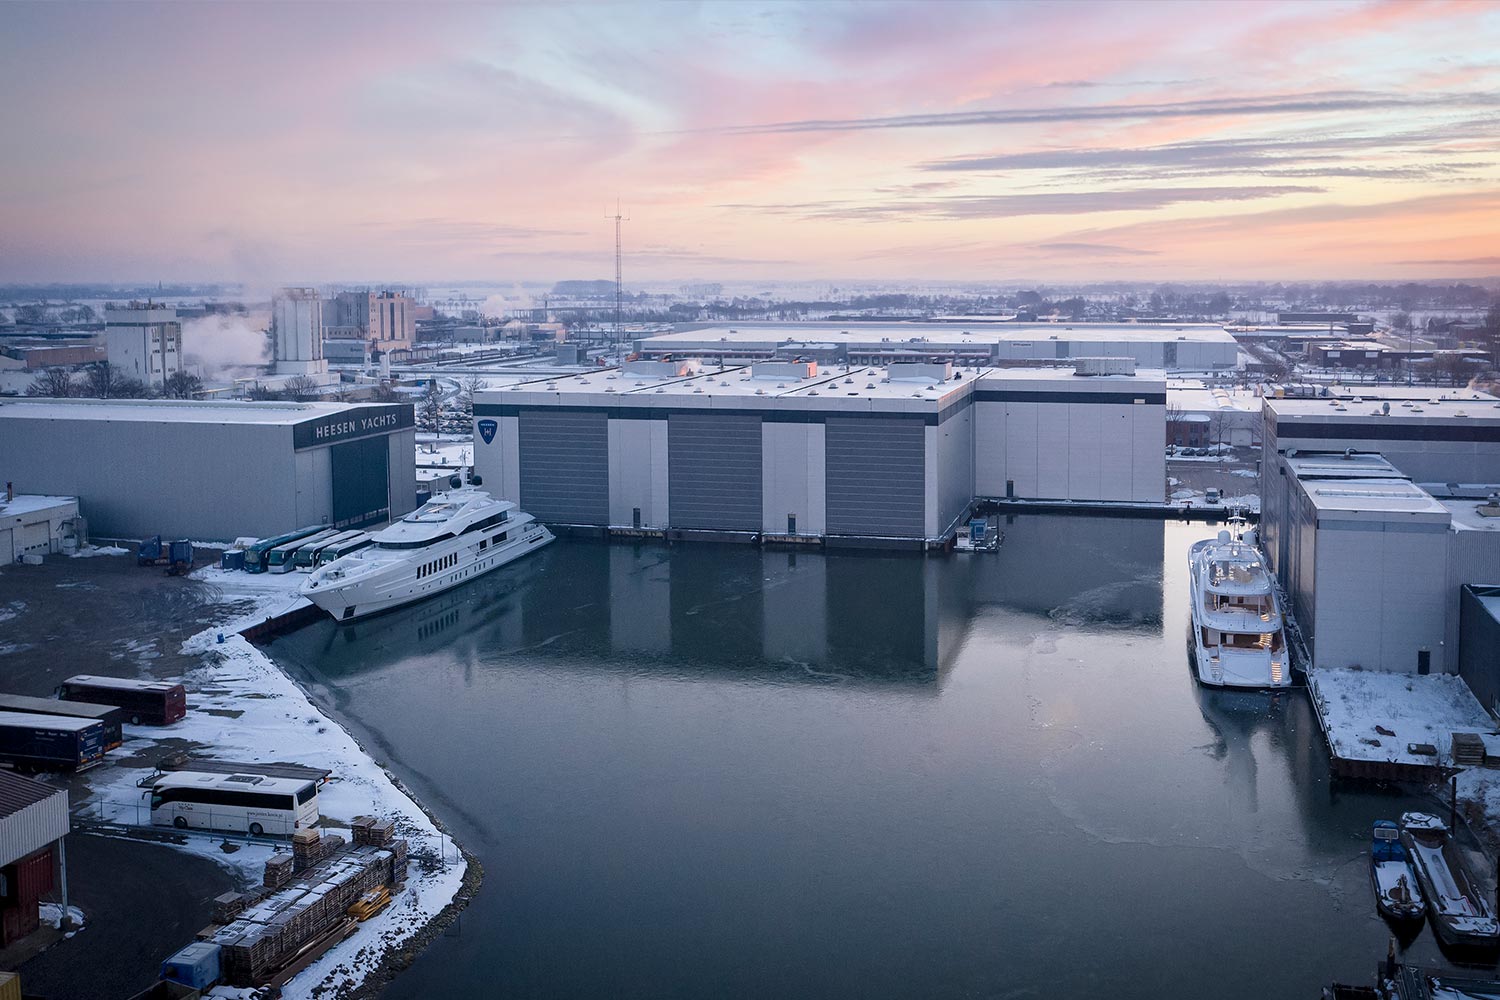 The Heesen Yachts shipyard in Oss, Netherlands